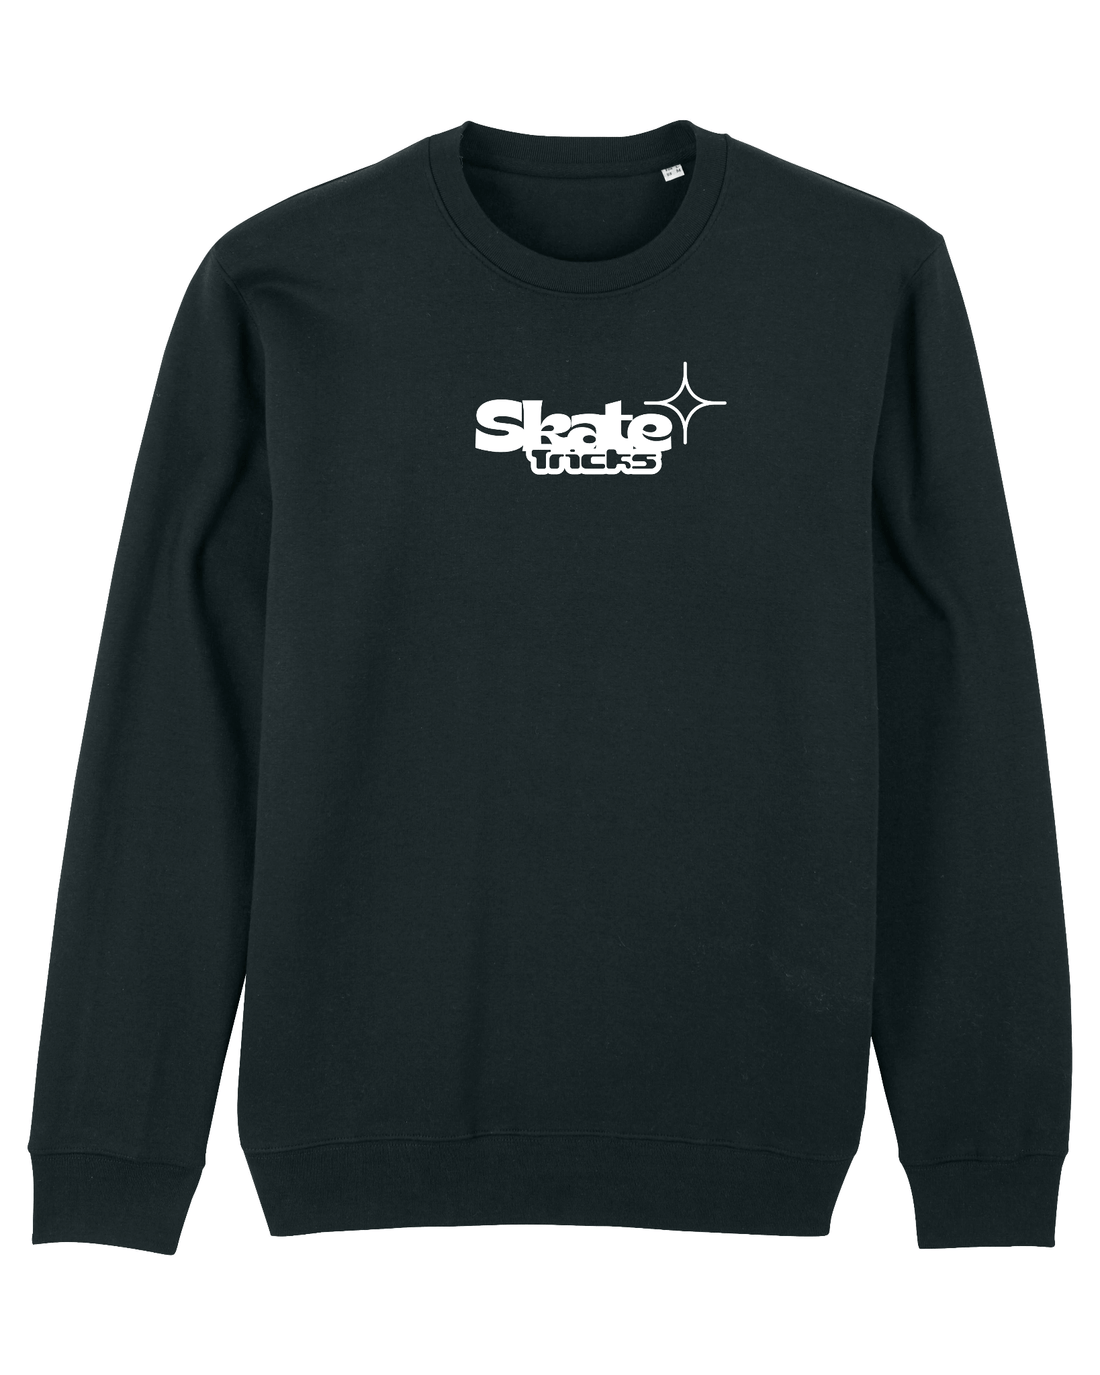 Black Skater Sweatshirt, Skate Tricks Front Print